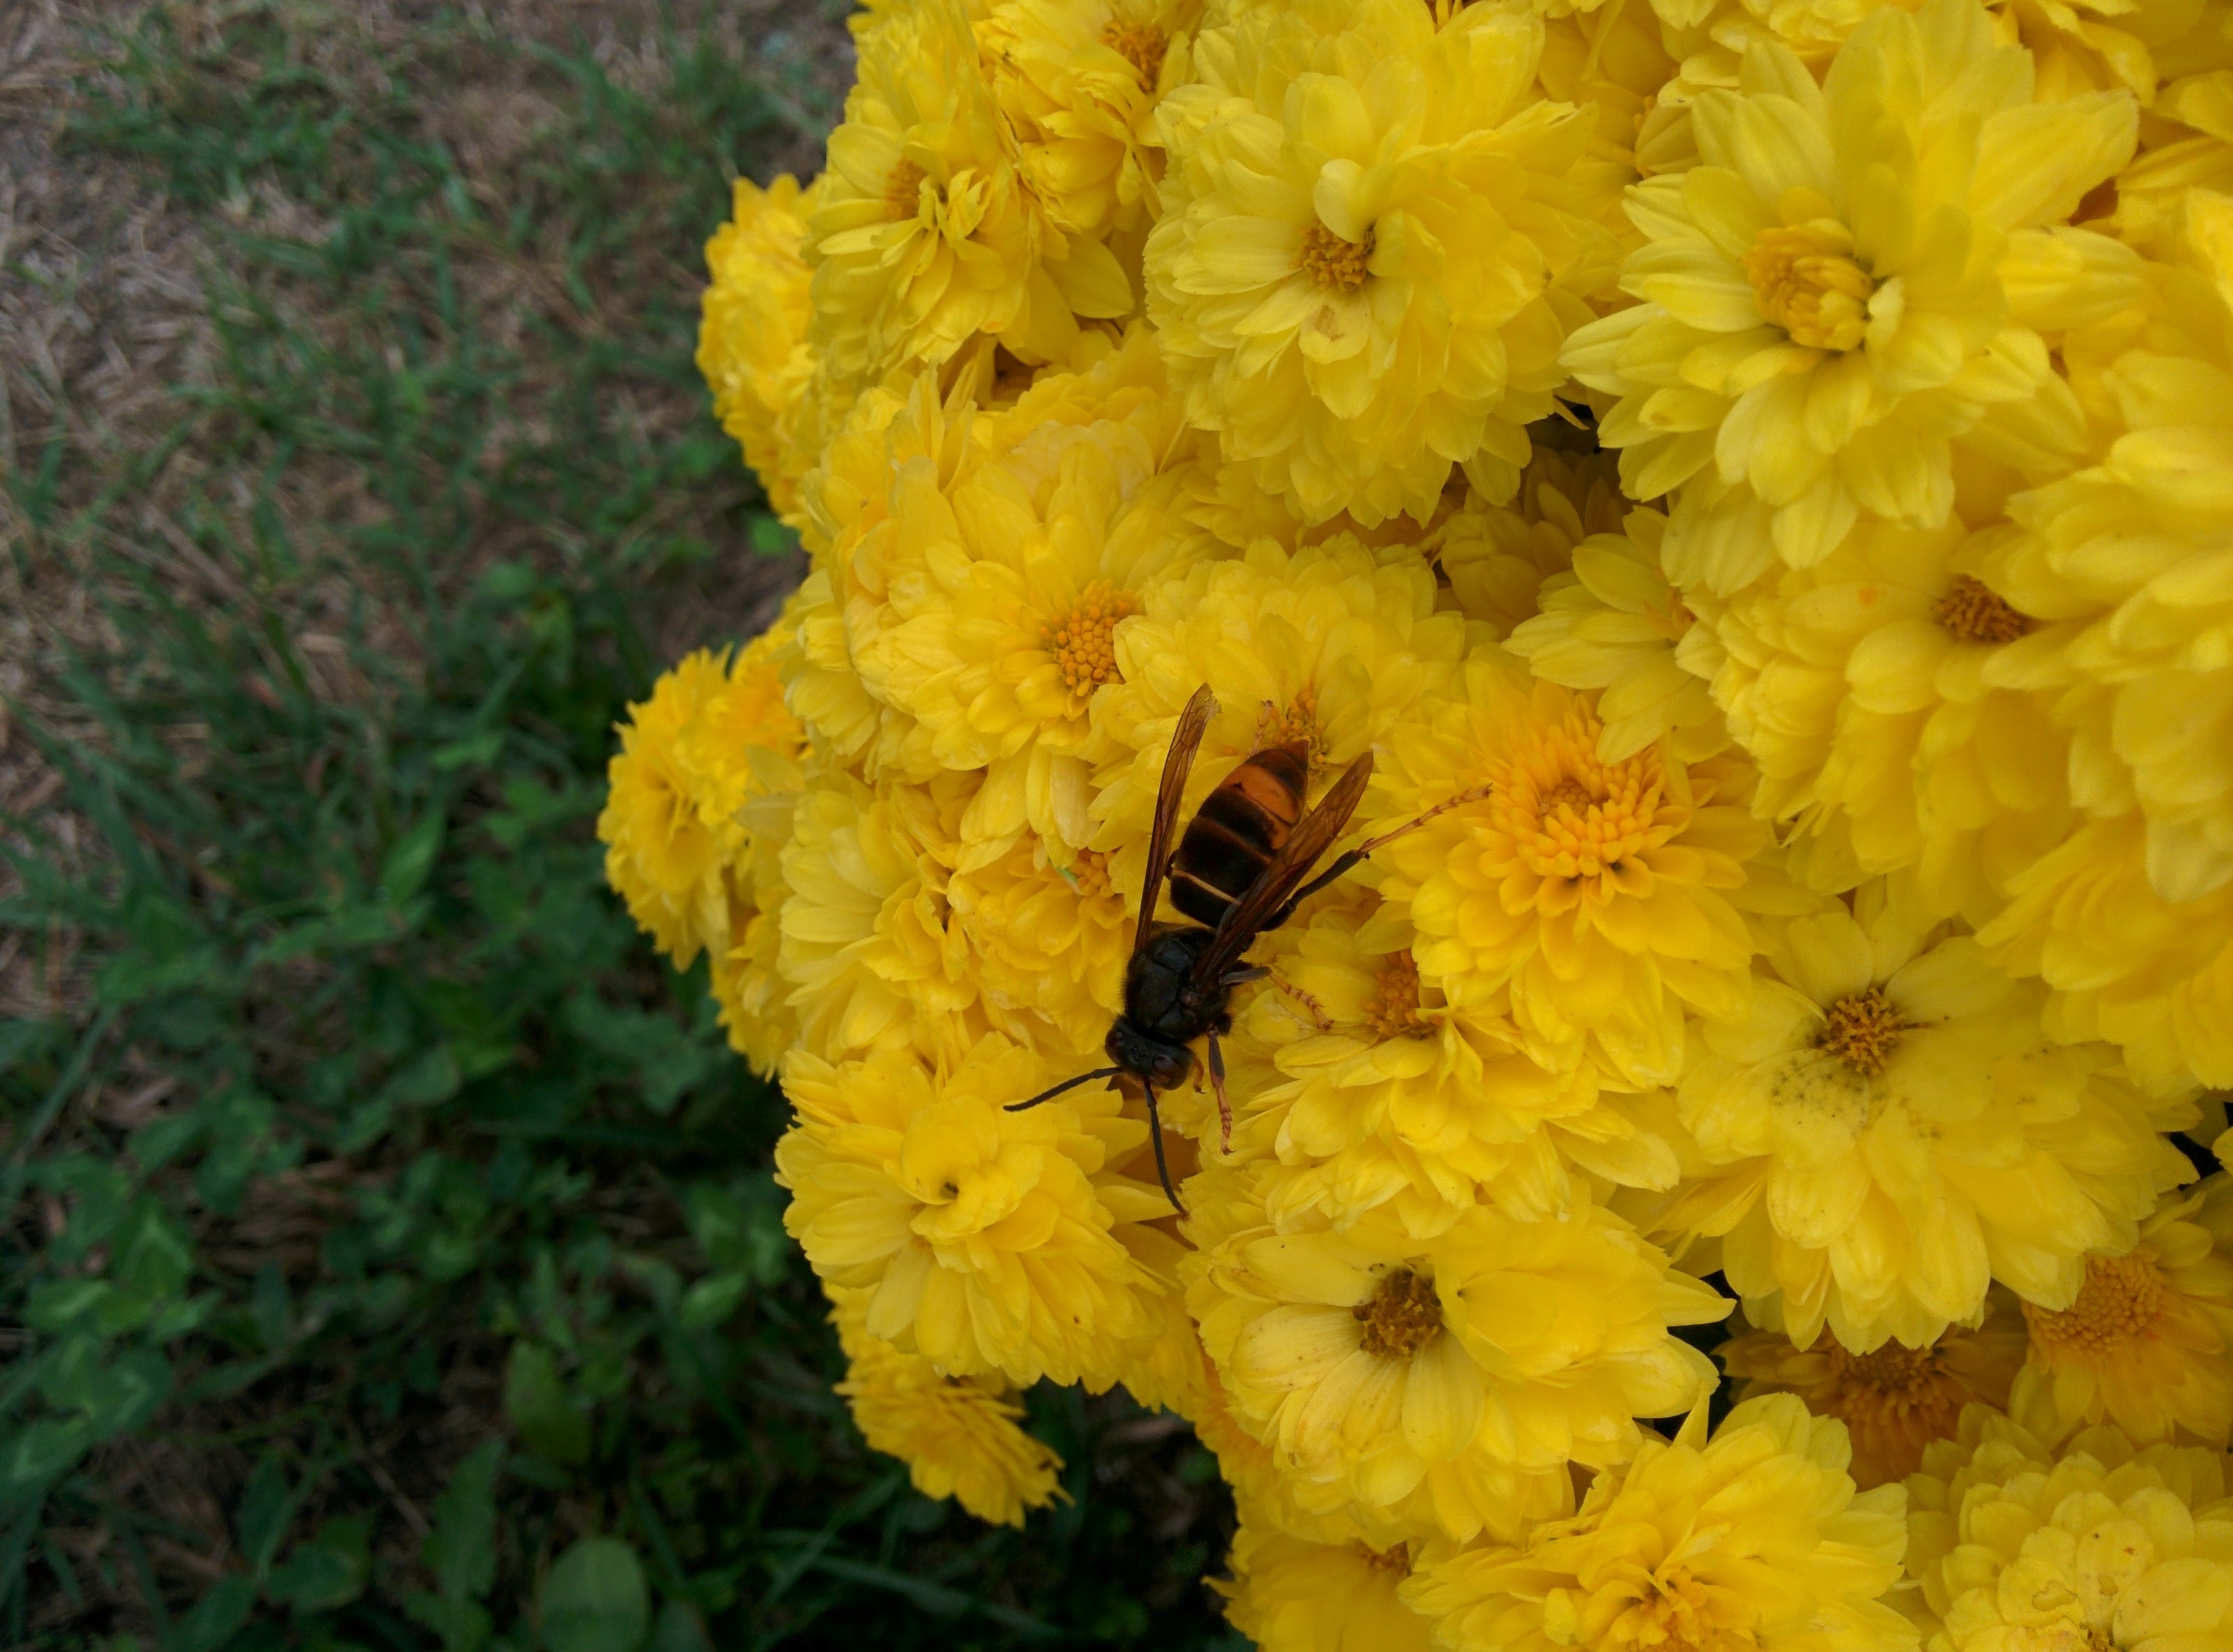 IMG_20151024_123102.jpg 노란색 국화꽃에 잠시 앉은 말벌. 배 끝의 굵은 황금띠가 특징 -- 등검은말벌